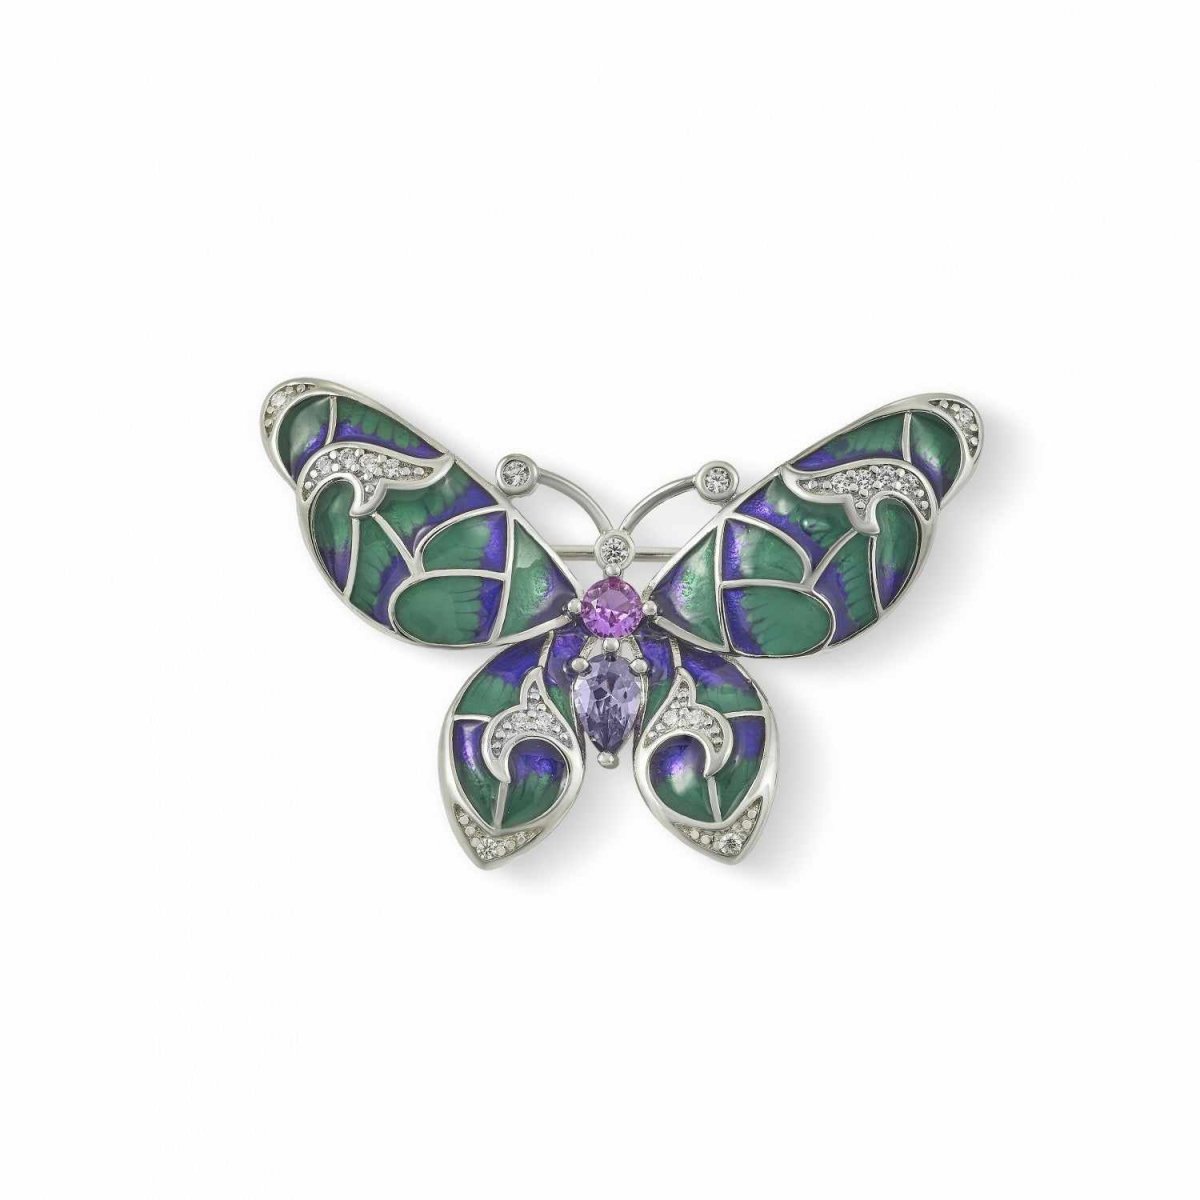 Brooch - Butterfly design silver brooch